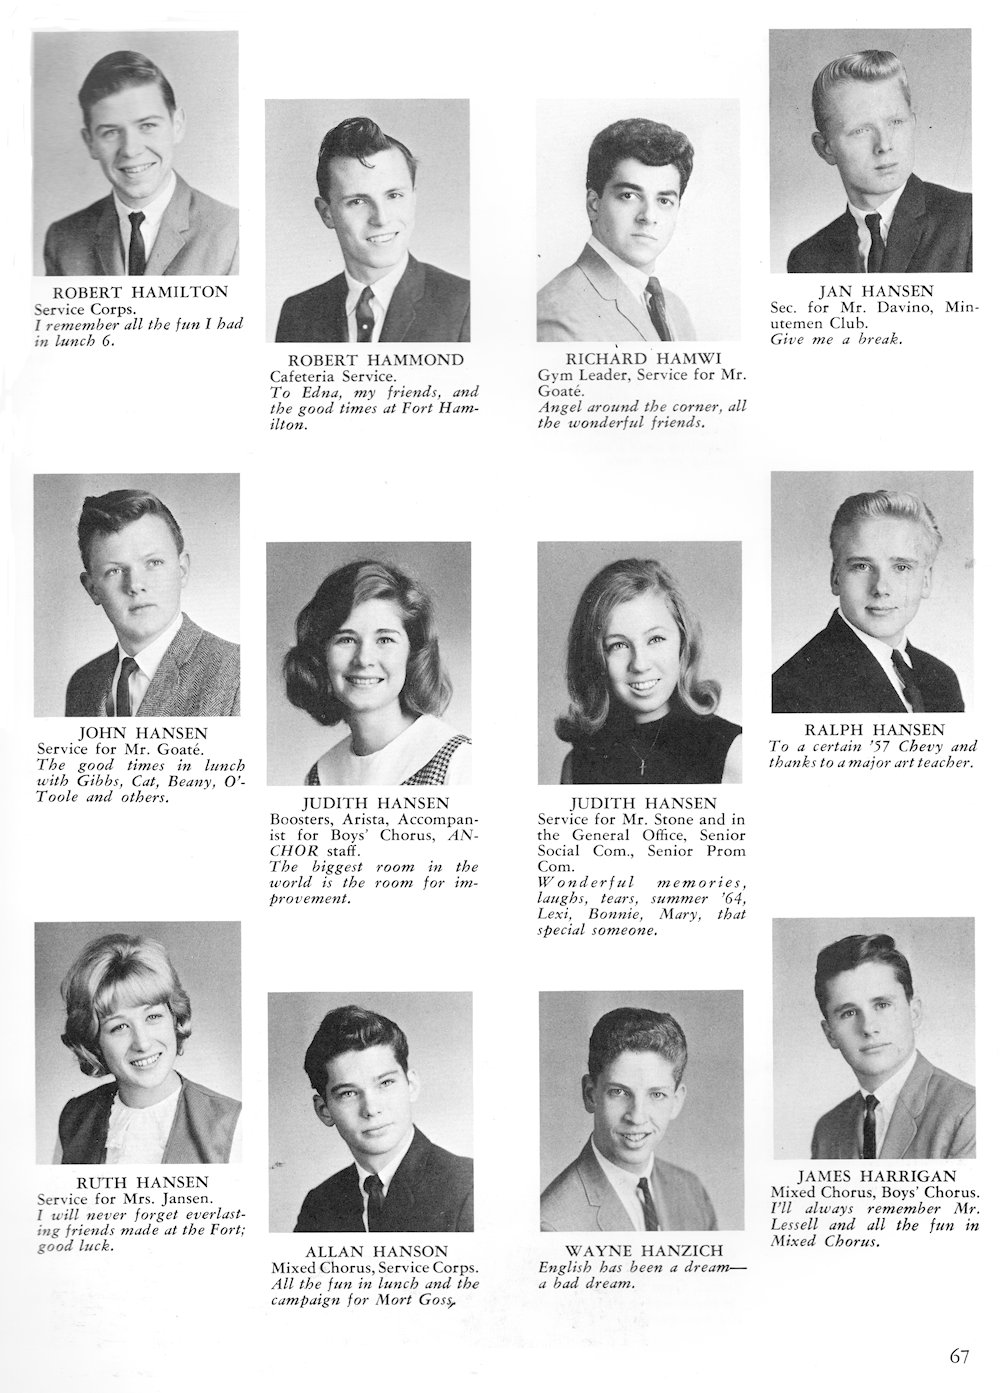 Hamilton-Harrigan page from Fort Hamilton High School 1965